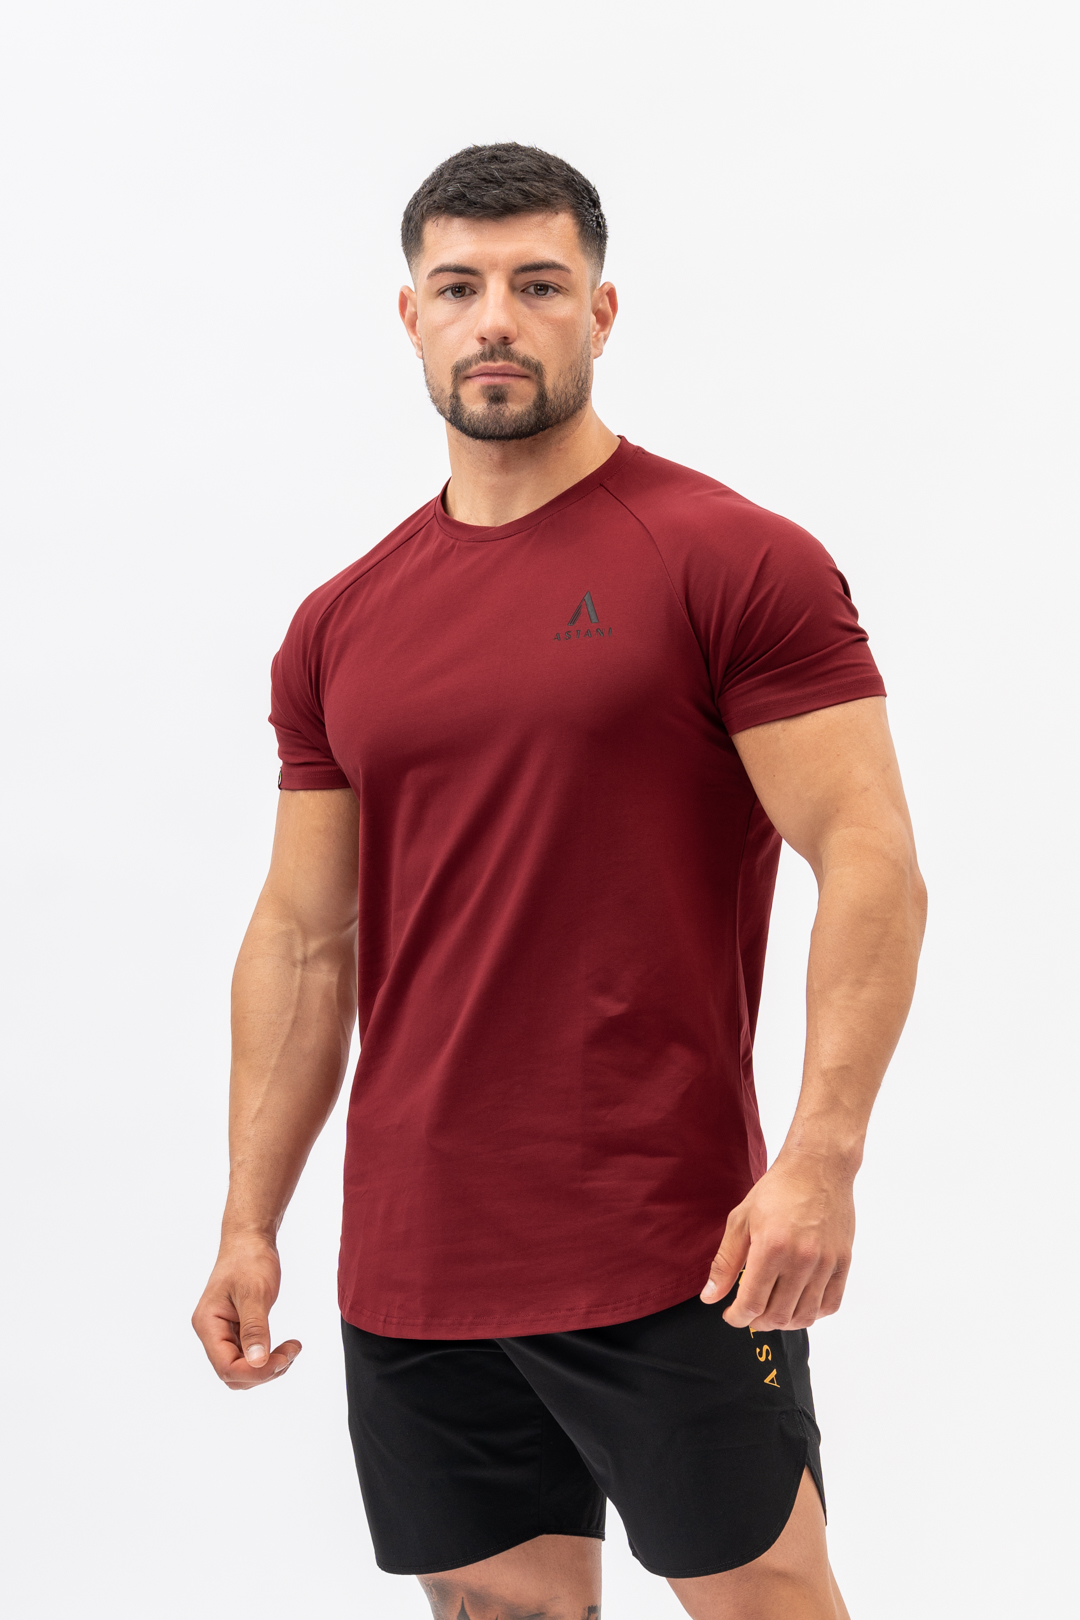 Code Burgundy Cotton Stretch Workout Gym Lifestyle T-Shirt